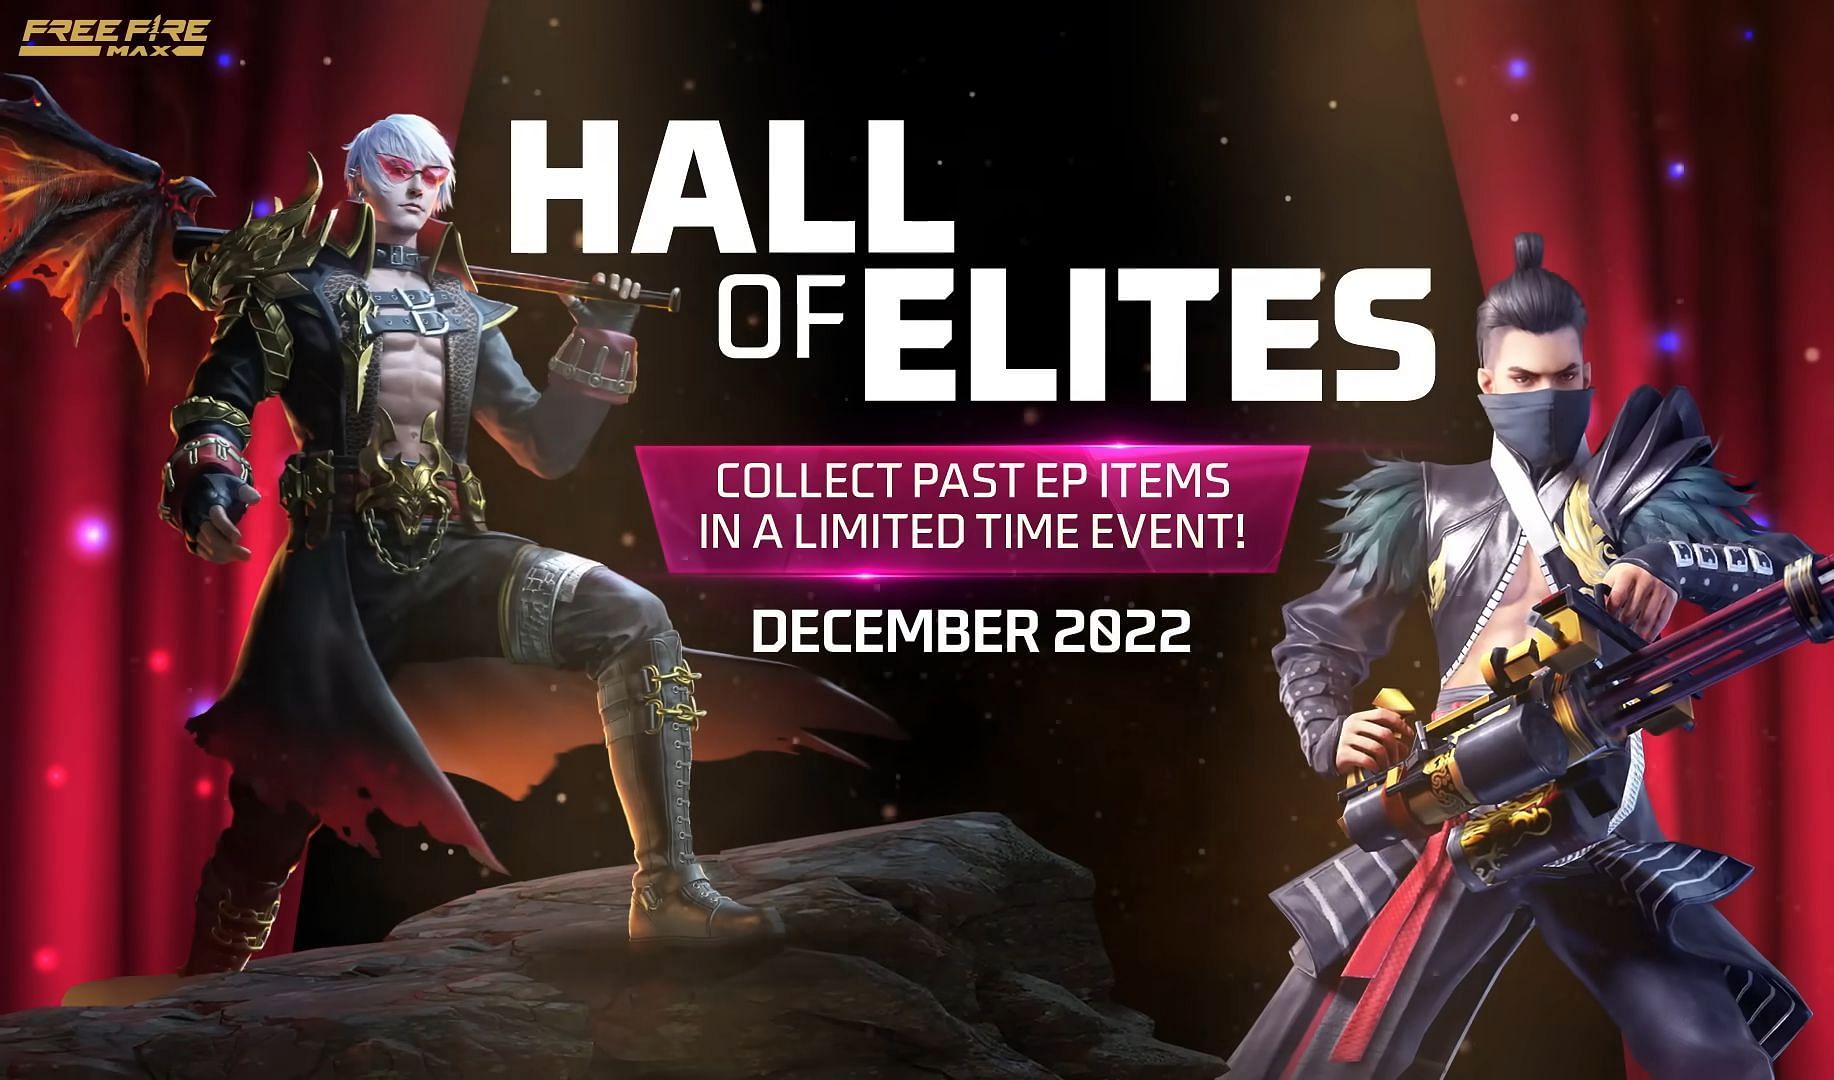 Hall of Elites will arrive in December 2022 (Image via Garena)